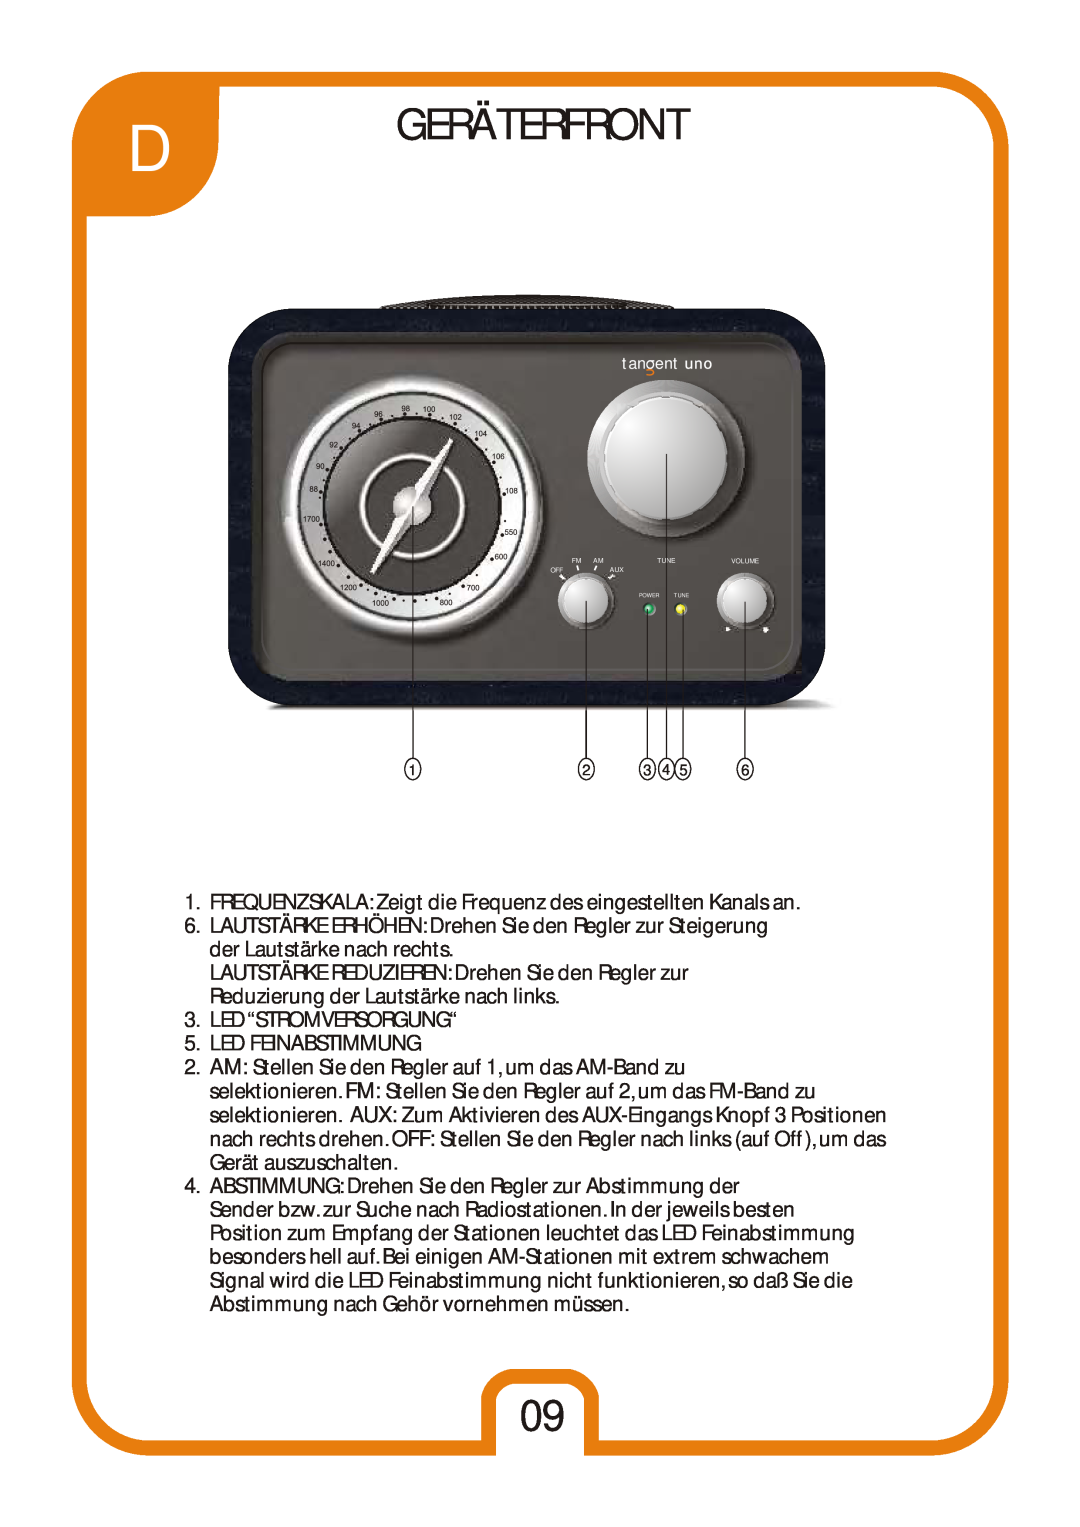 Tangent Audio Uno Table Radio user manual Geräterfront 